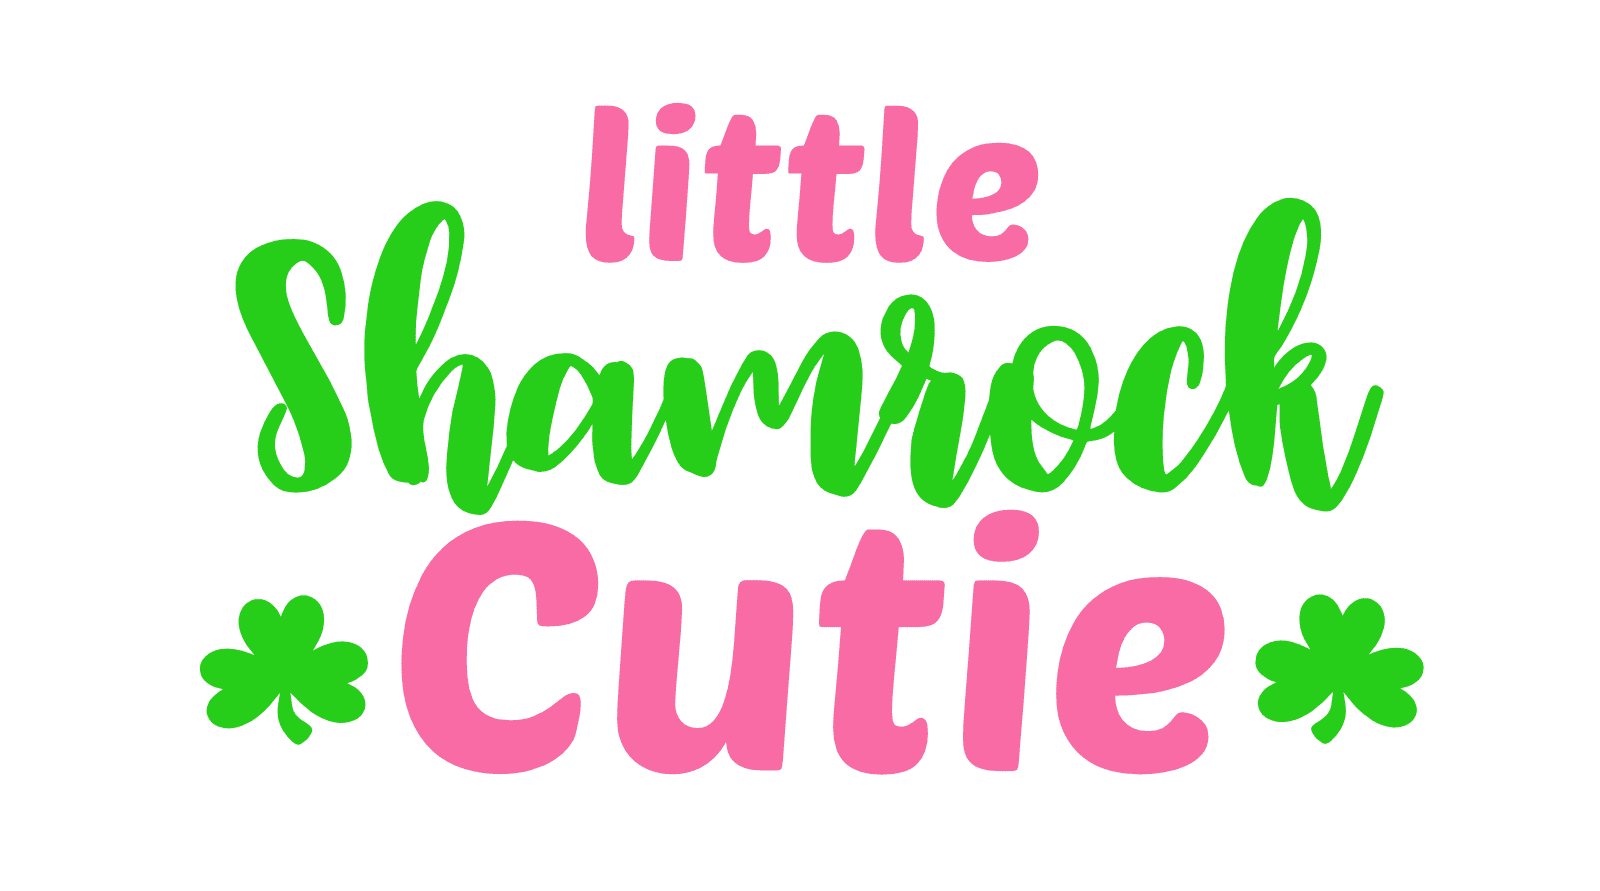 little-shamrock-cutie-baby-onesie-st-patrick-day-free-svg-file-SvgHeart.Com